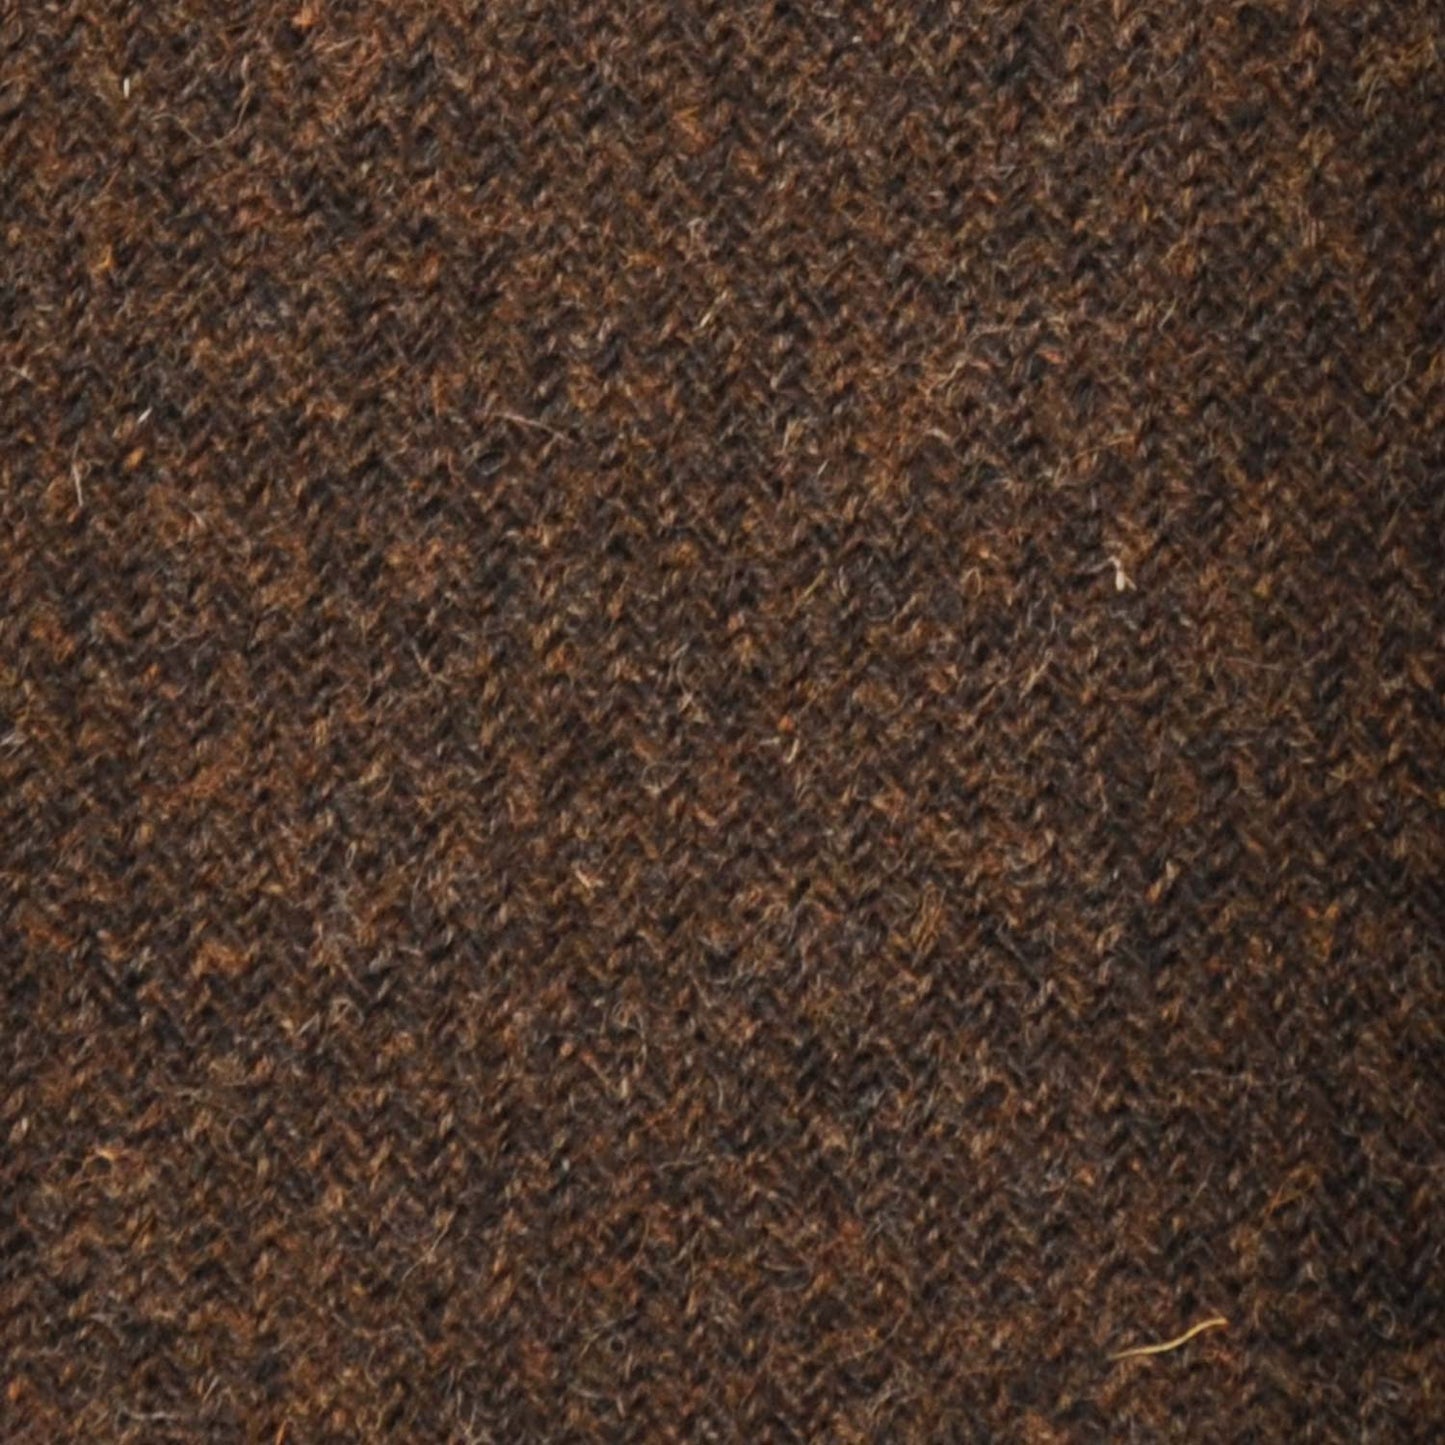 F.Marino Tweed Tie 3 Folds Chocolate-Wools Boutique Uomo